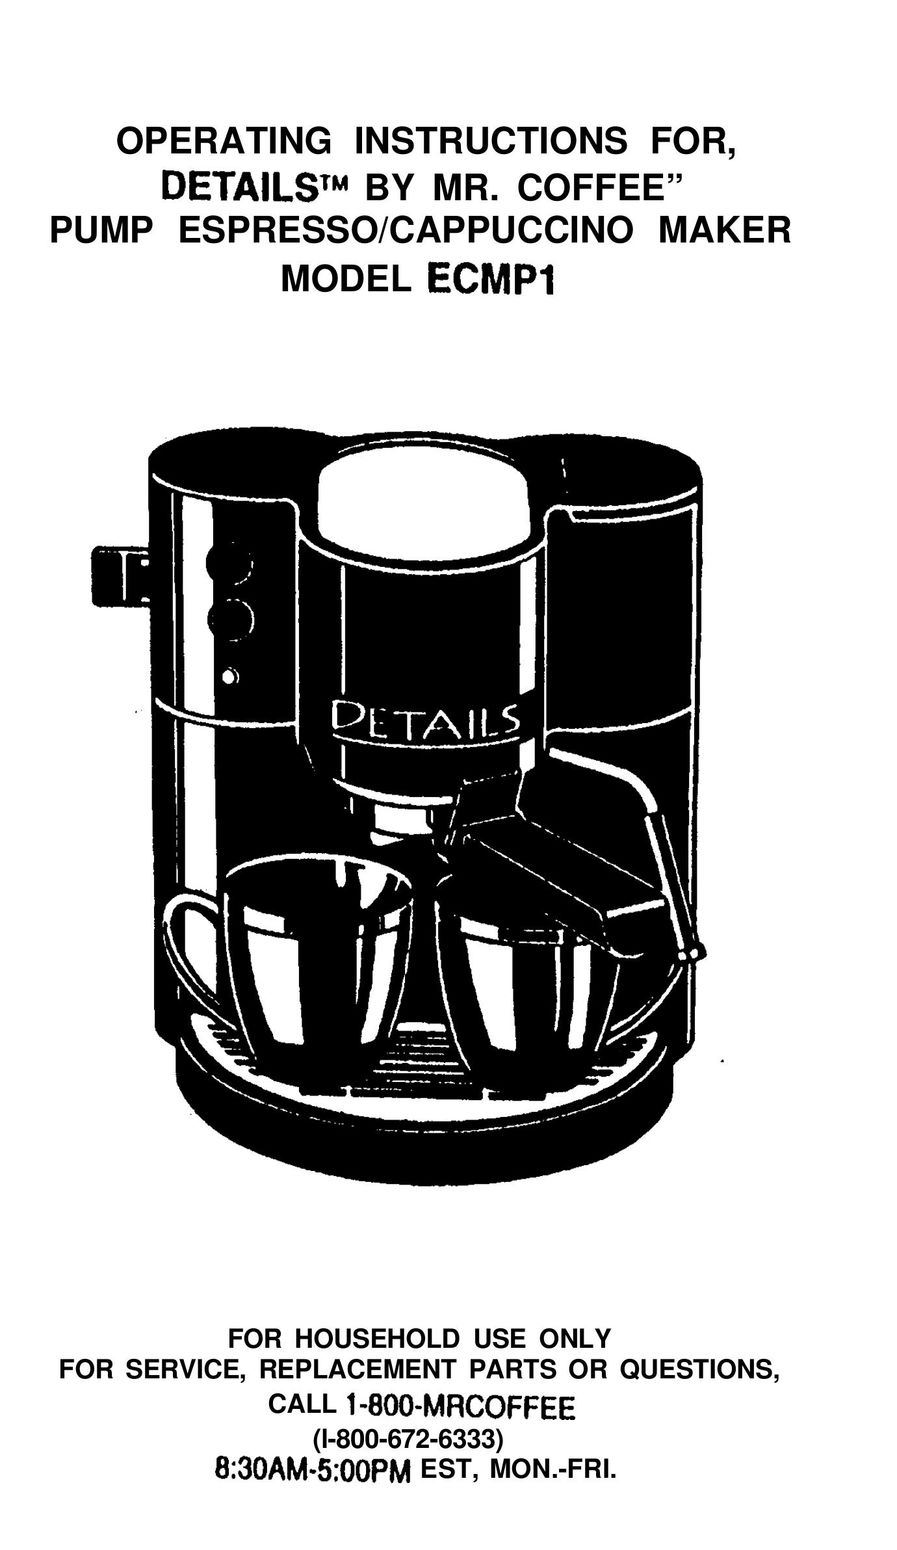 Mr. Coffee ECMPl Espresso Maker User Manual